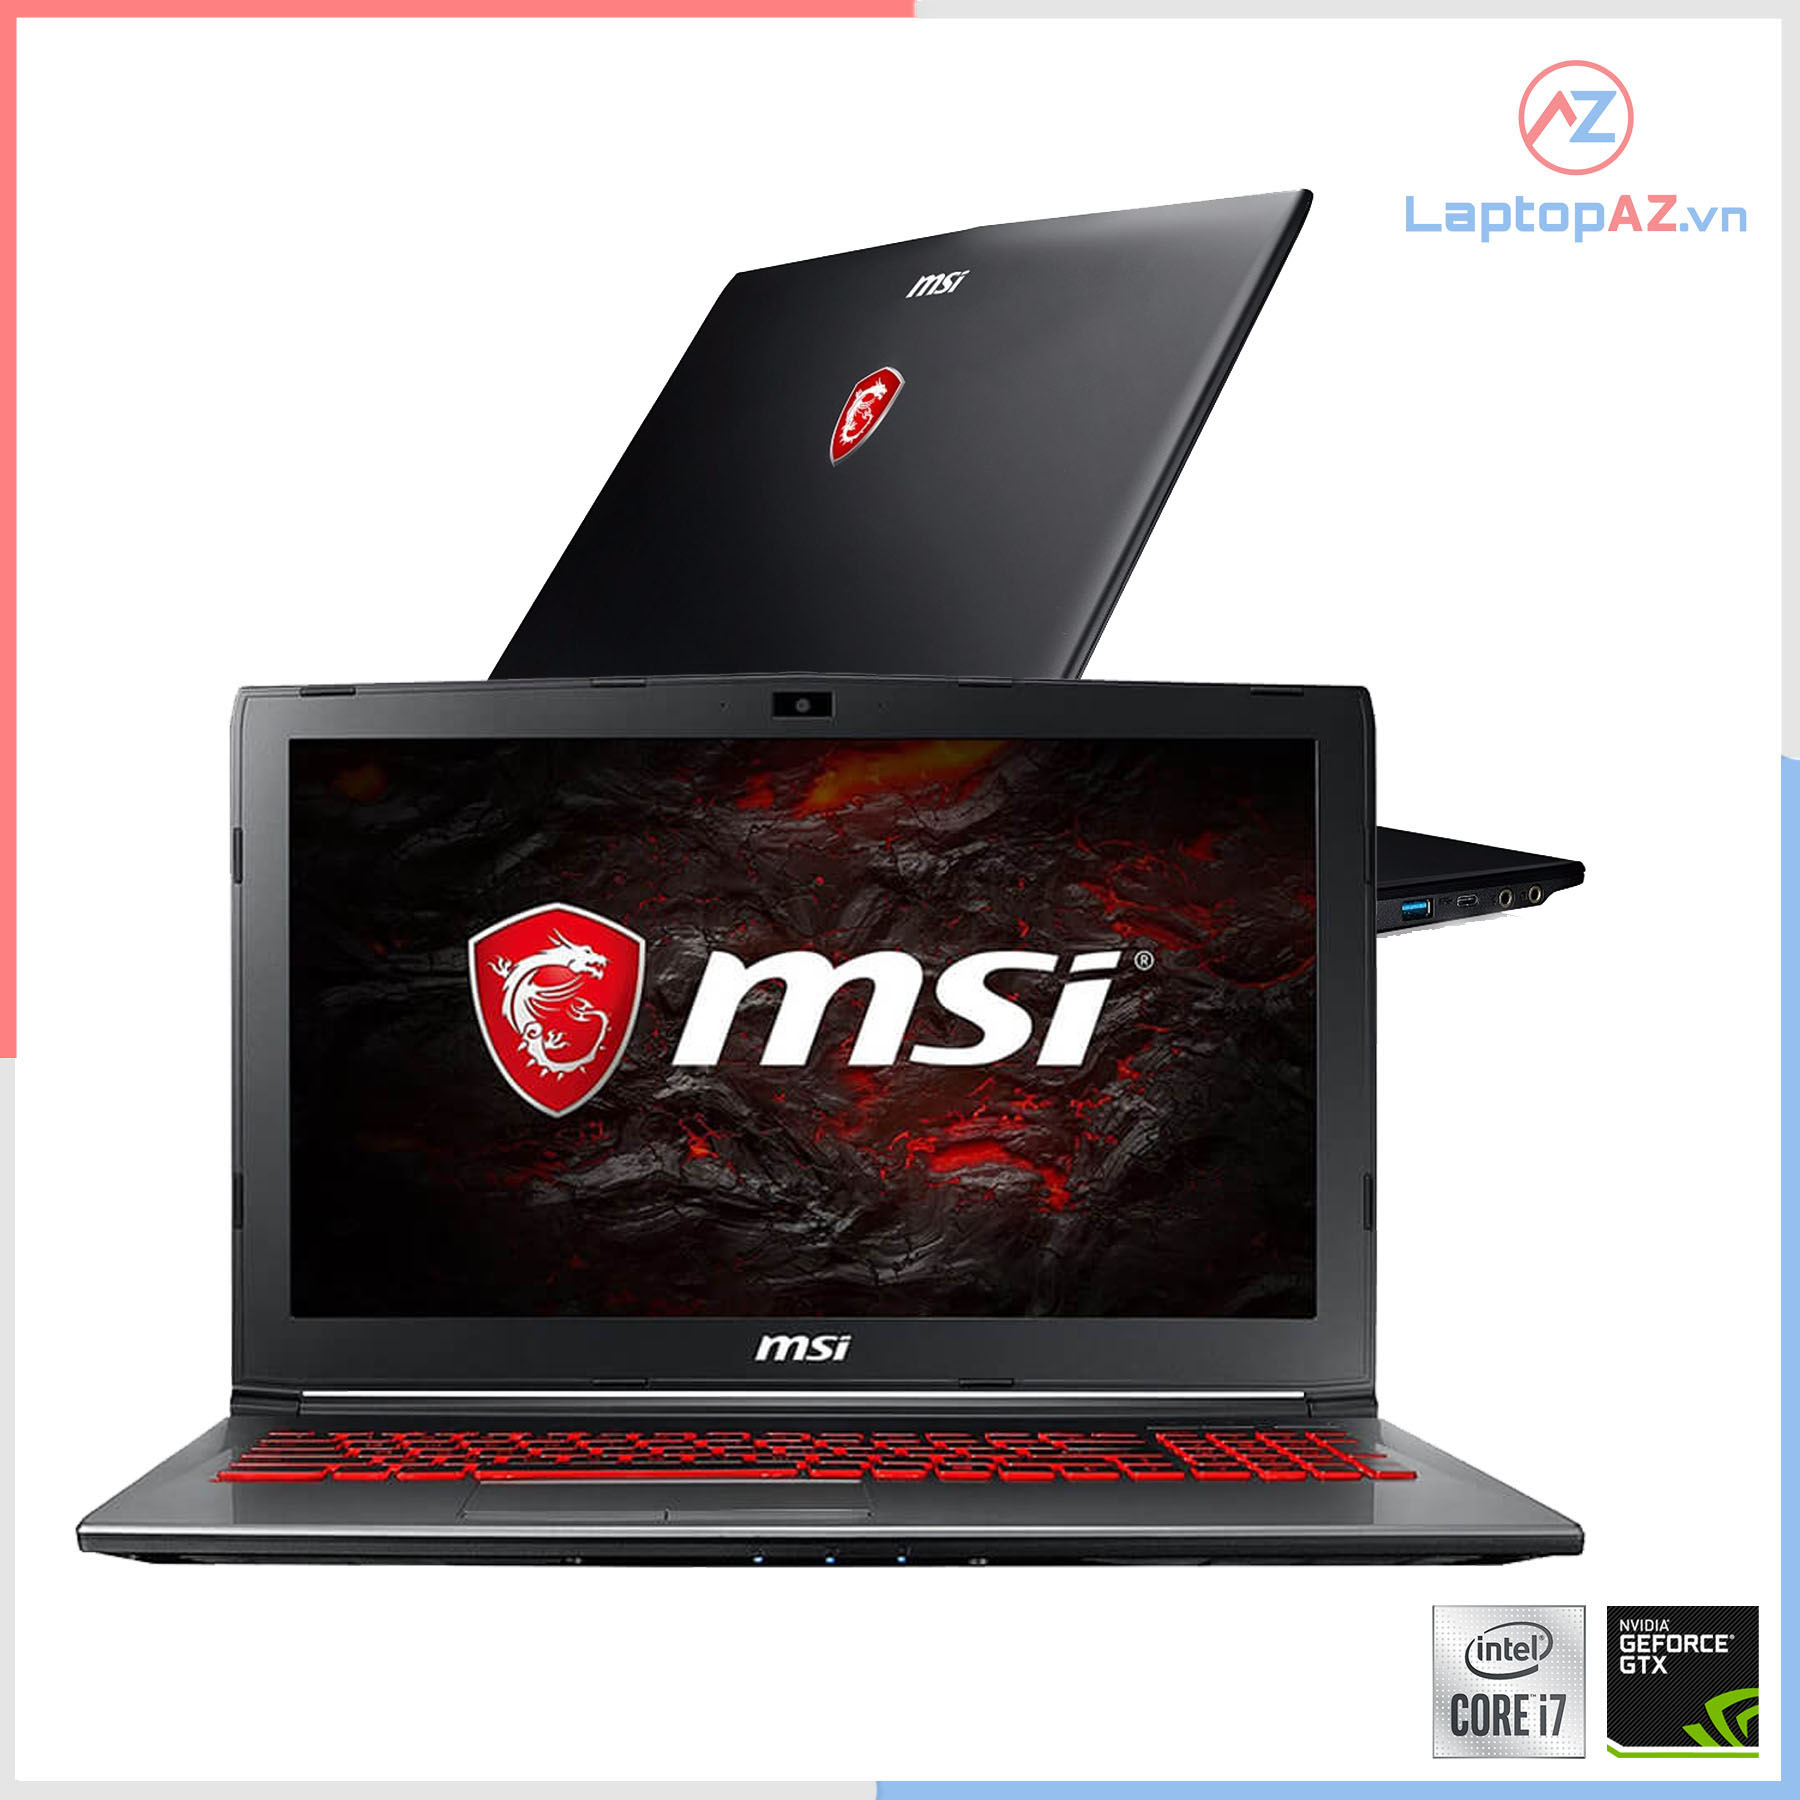 Laptop MSI GV72 7RD (Core i7-7700HQ, 8GB, 1TB, VGA 4GB  NVIDIA GTX 1050, 17.3 inch FHD)